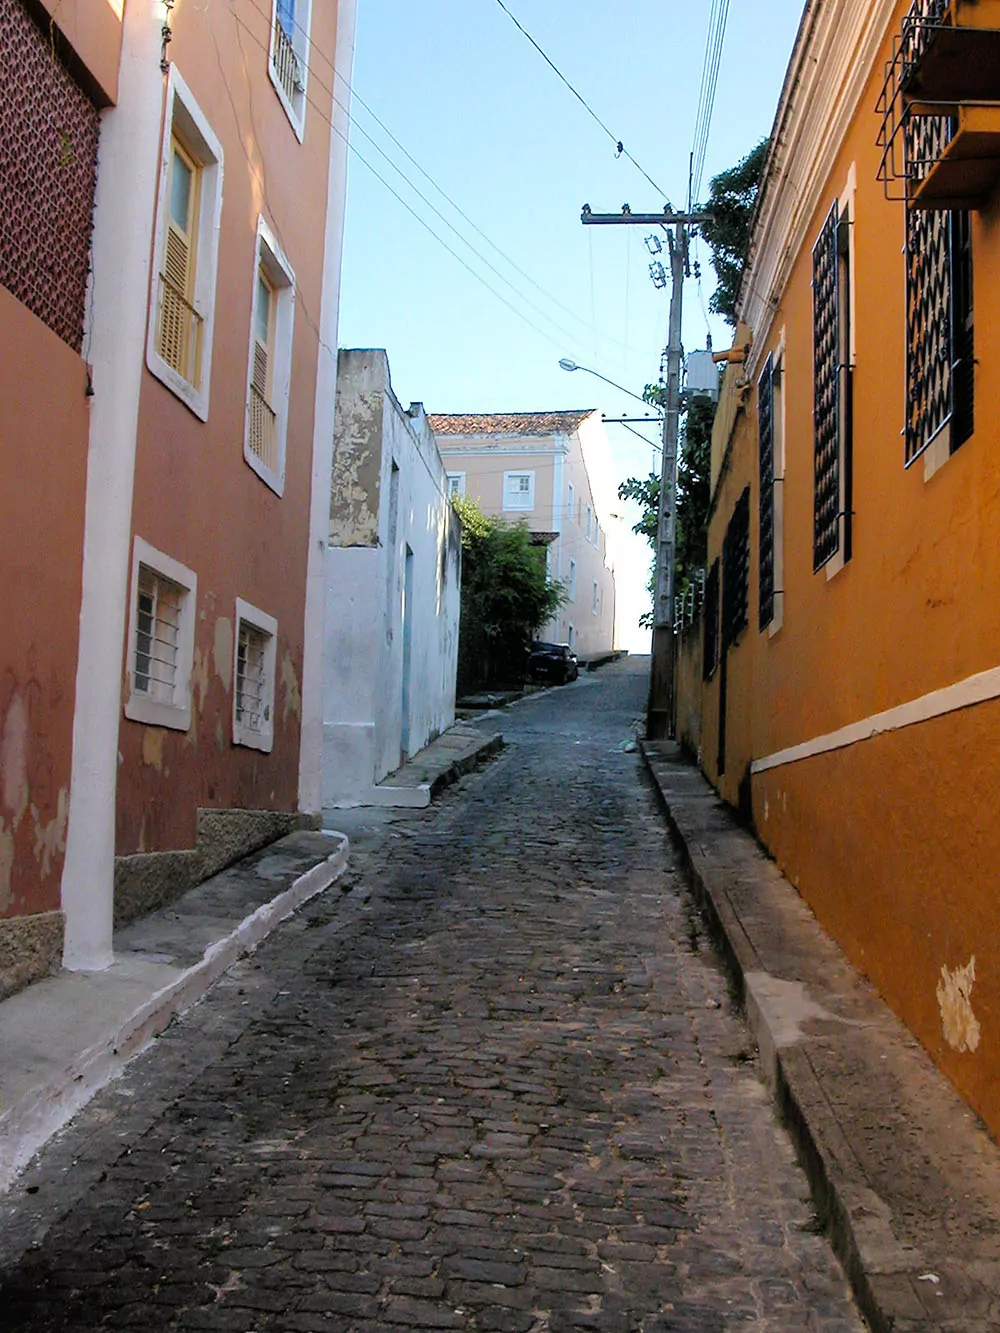 Colorful buildings in a cobblestone alleyway in Olinda Brazil